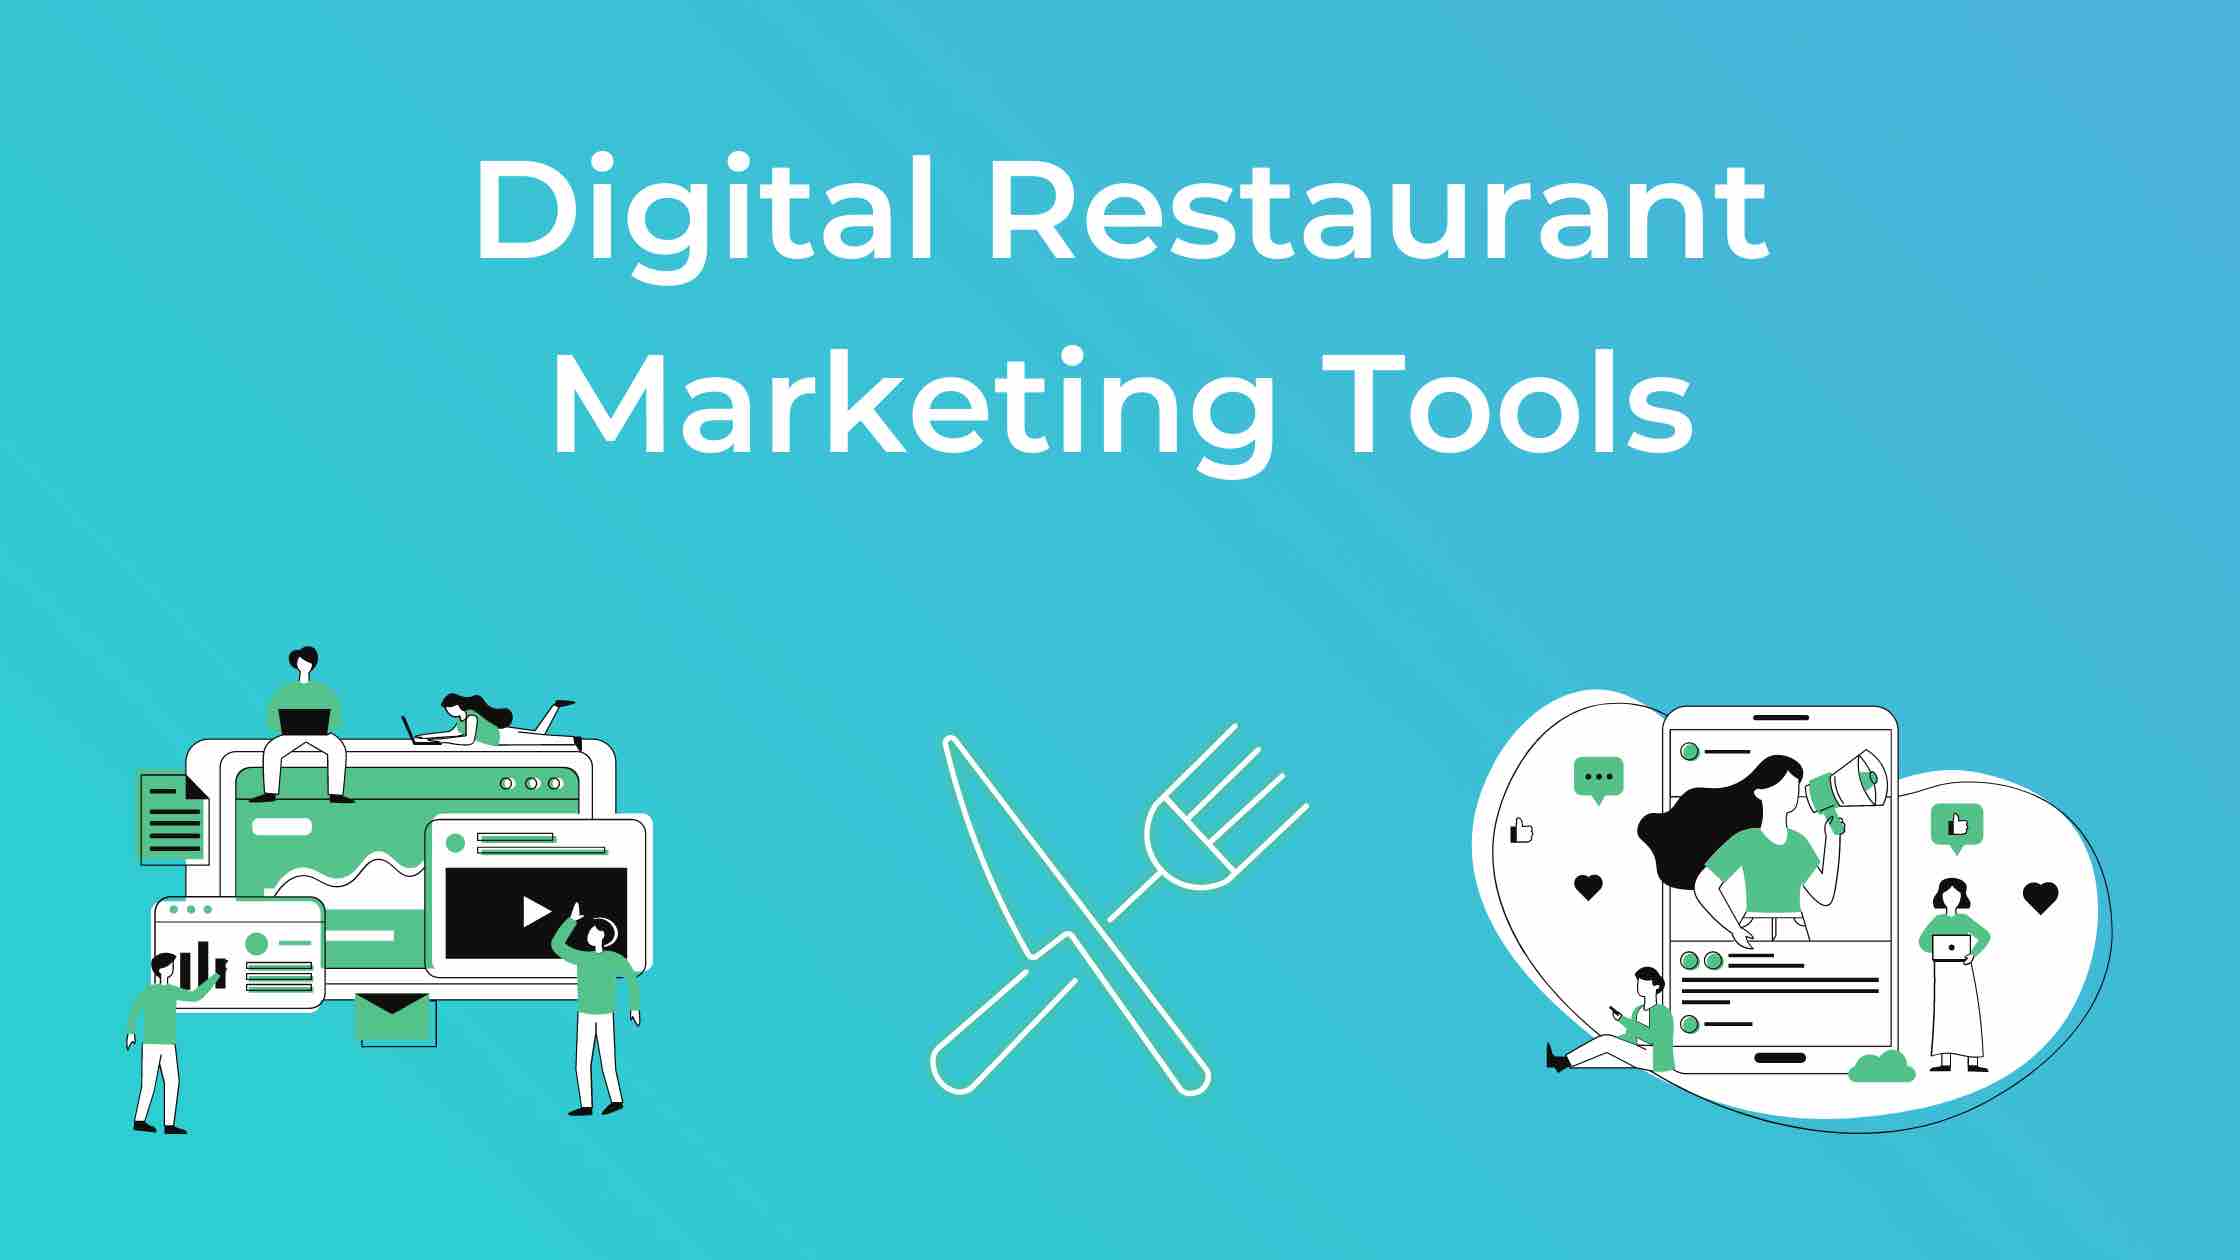 Digital Restaurant Marketing Tools to Build Customer Loyalty